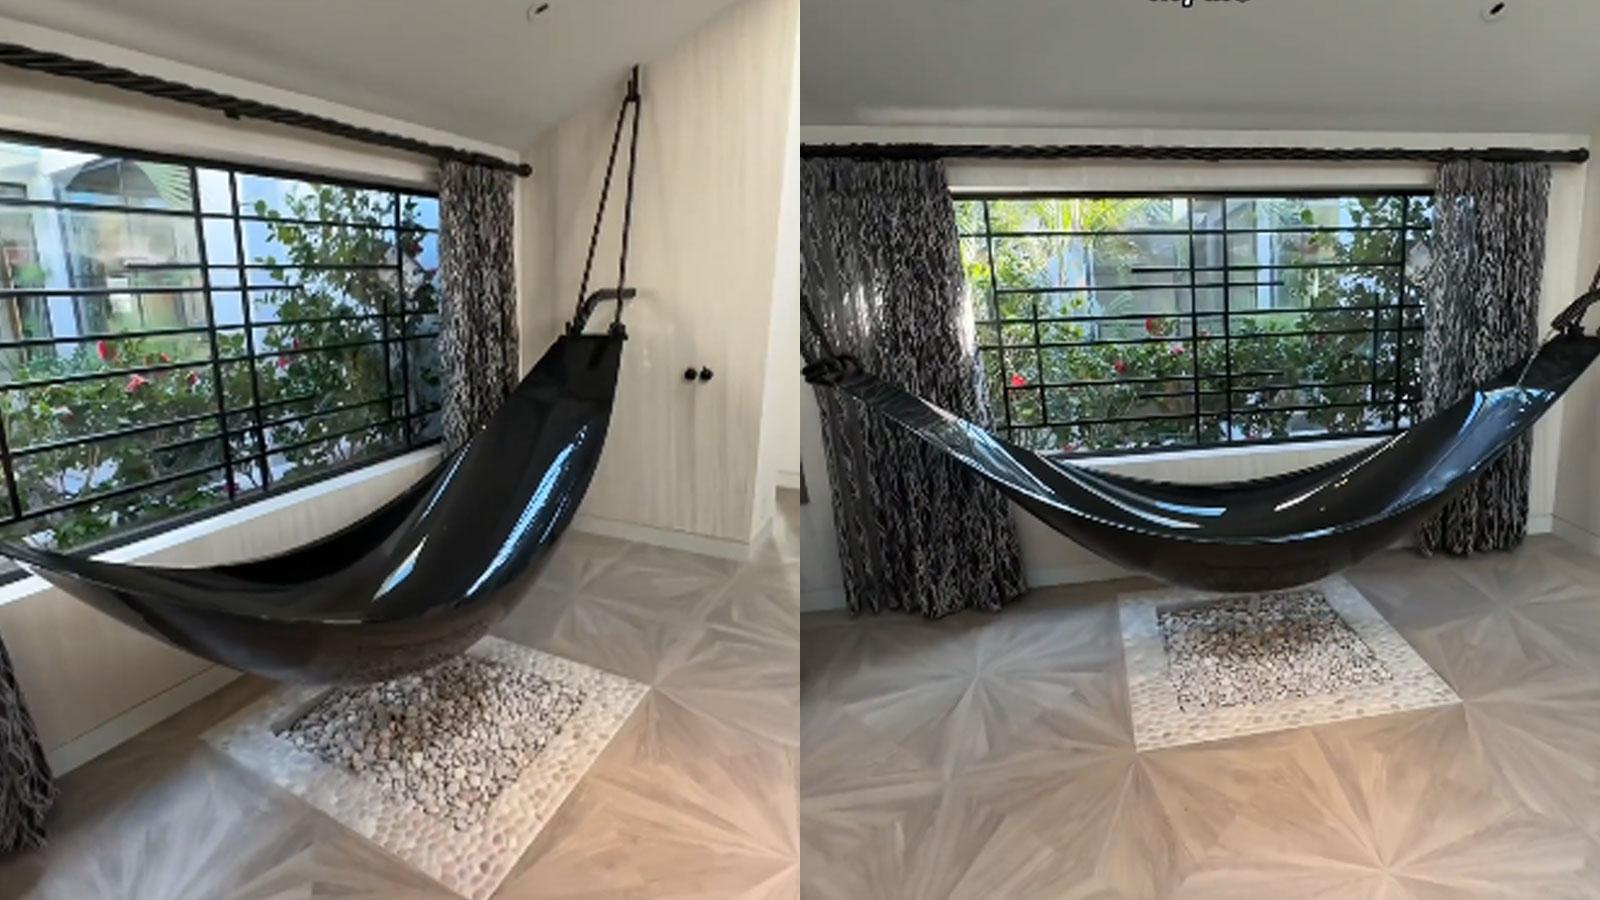 Carbon fiber hammock bathtub hanging from ceiling